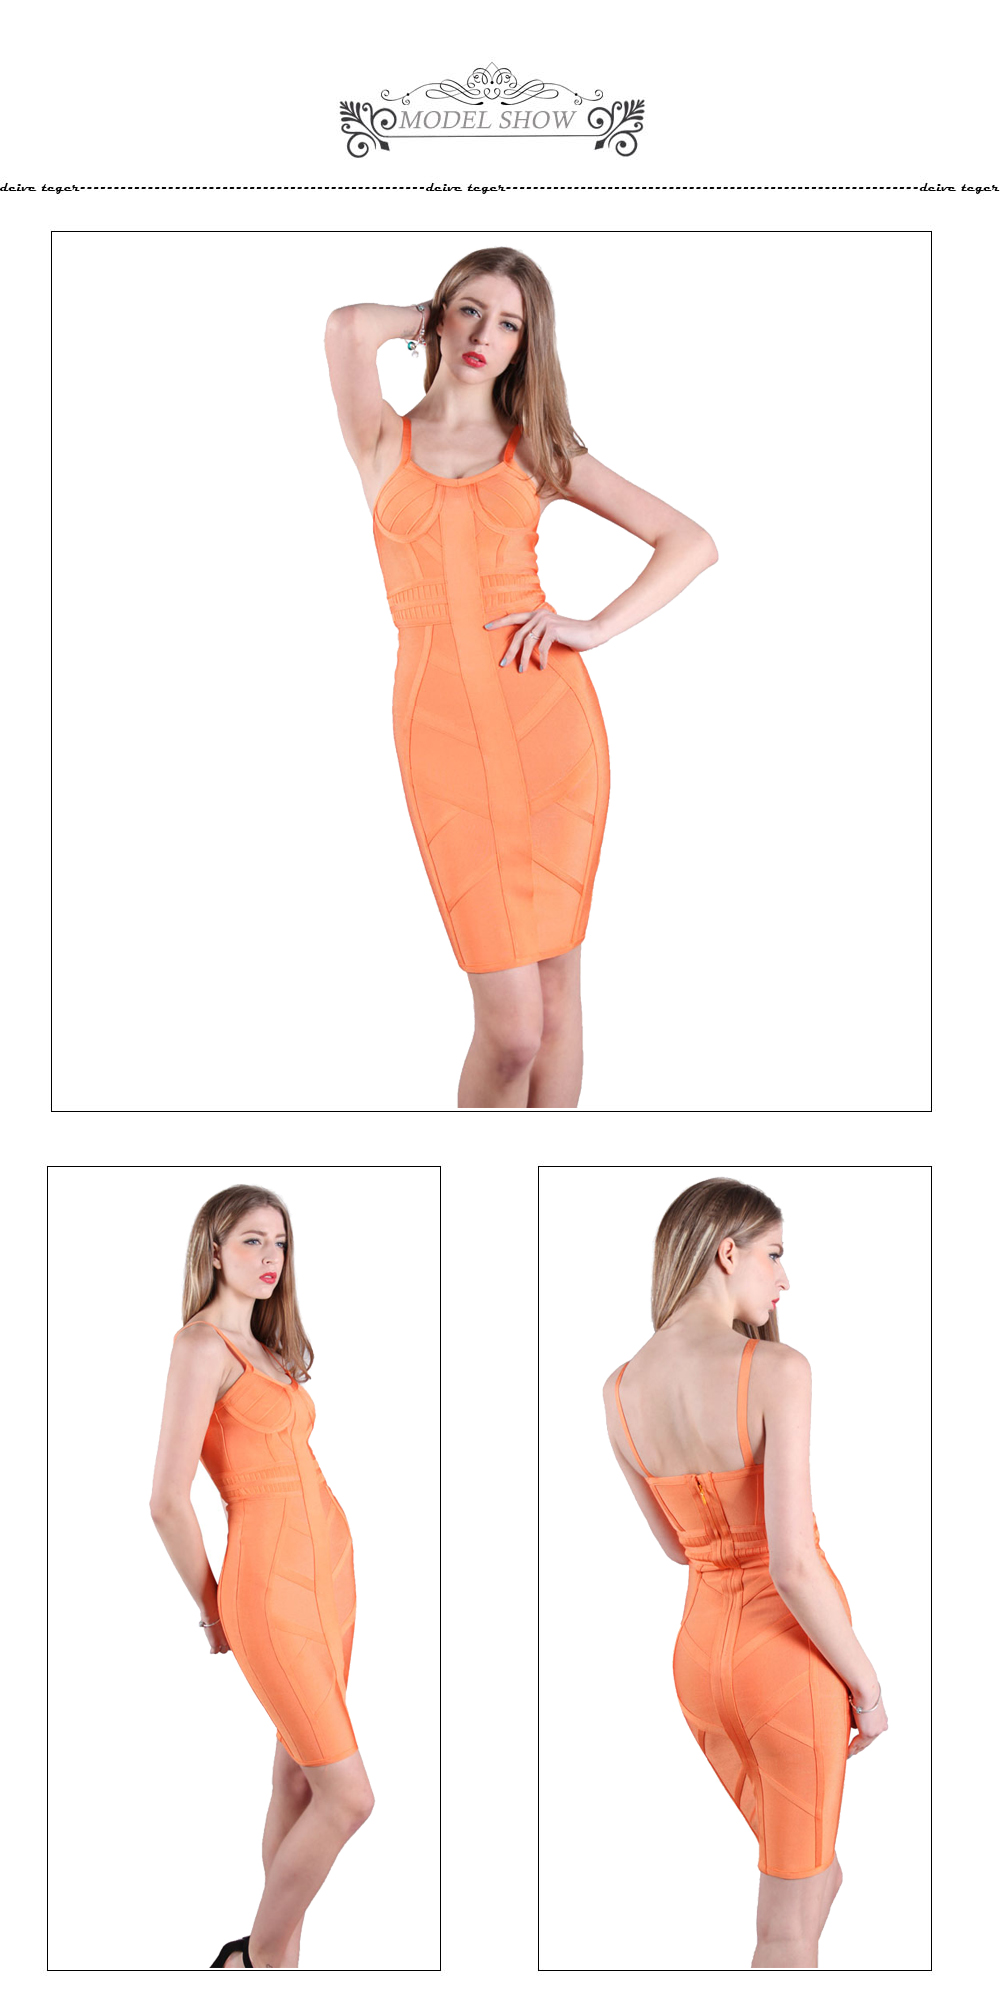 DEIVE-TEGER--New-Coral-Bustier-Dress-Women-Bandage-Dress-Pencil-Lady-Club-Dress-Orange-Dresses--HL15-32391095782